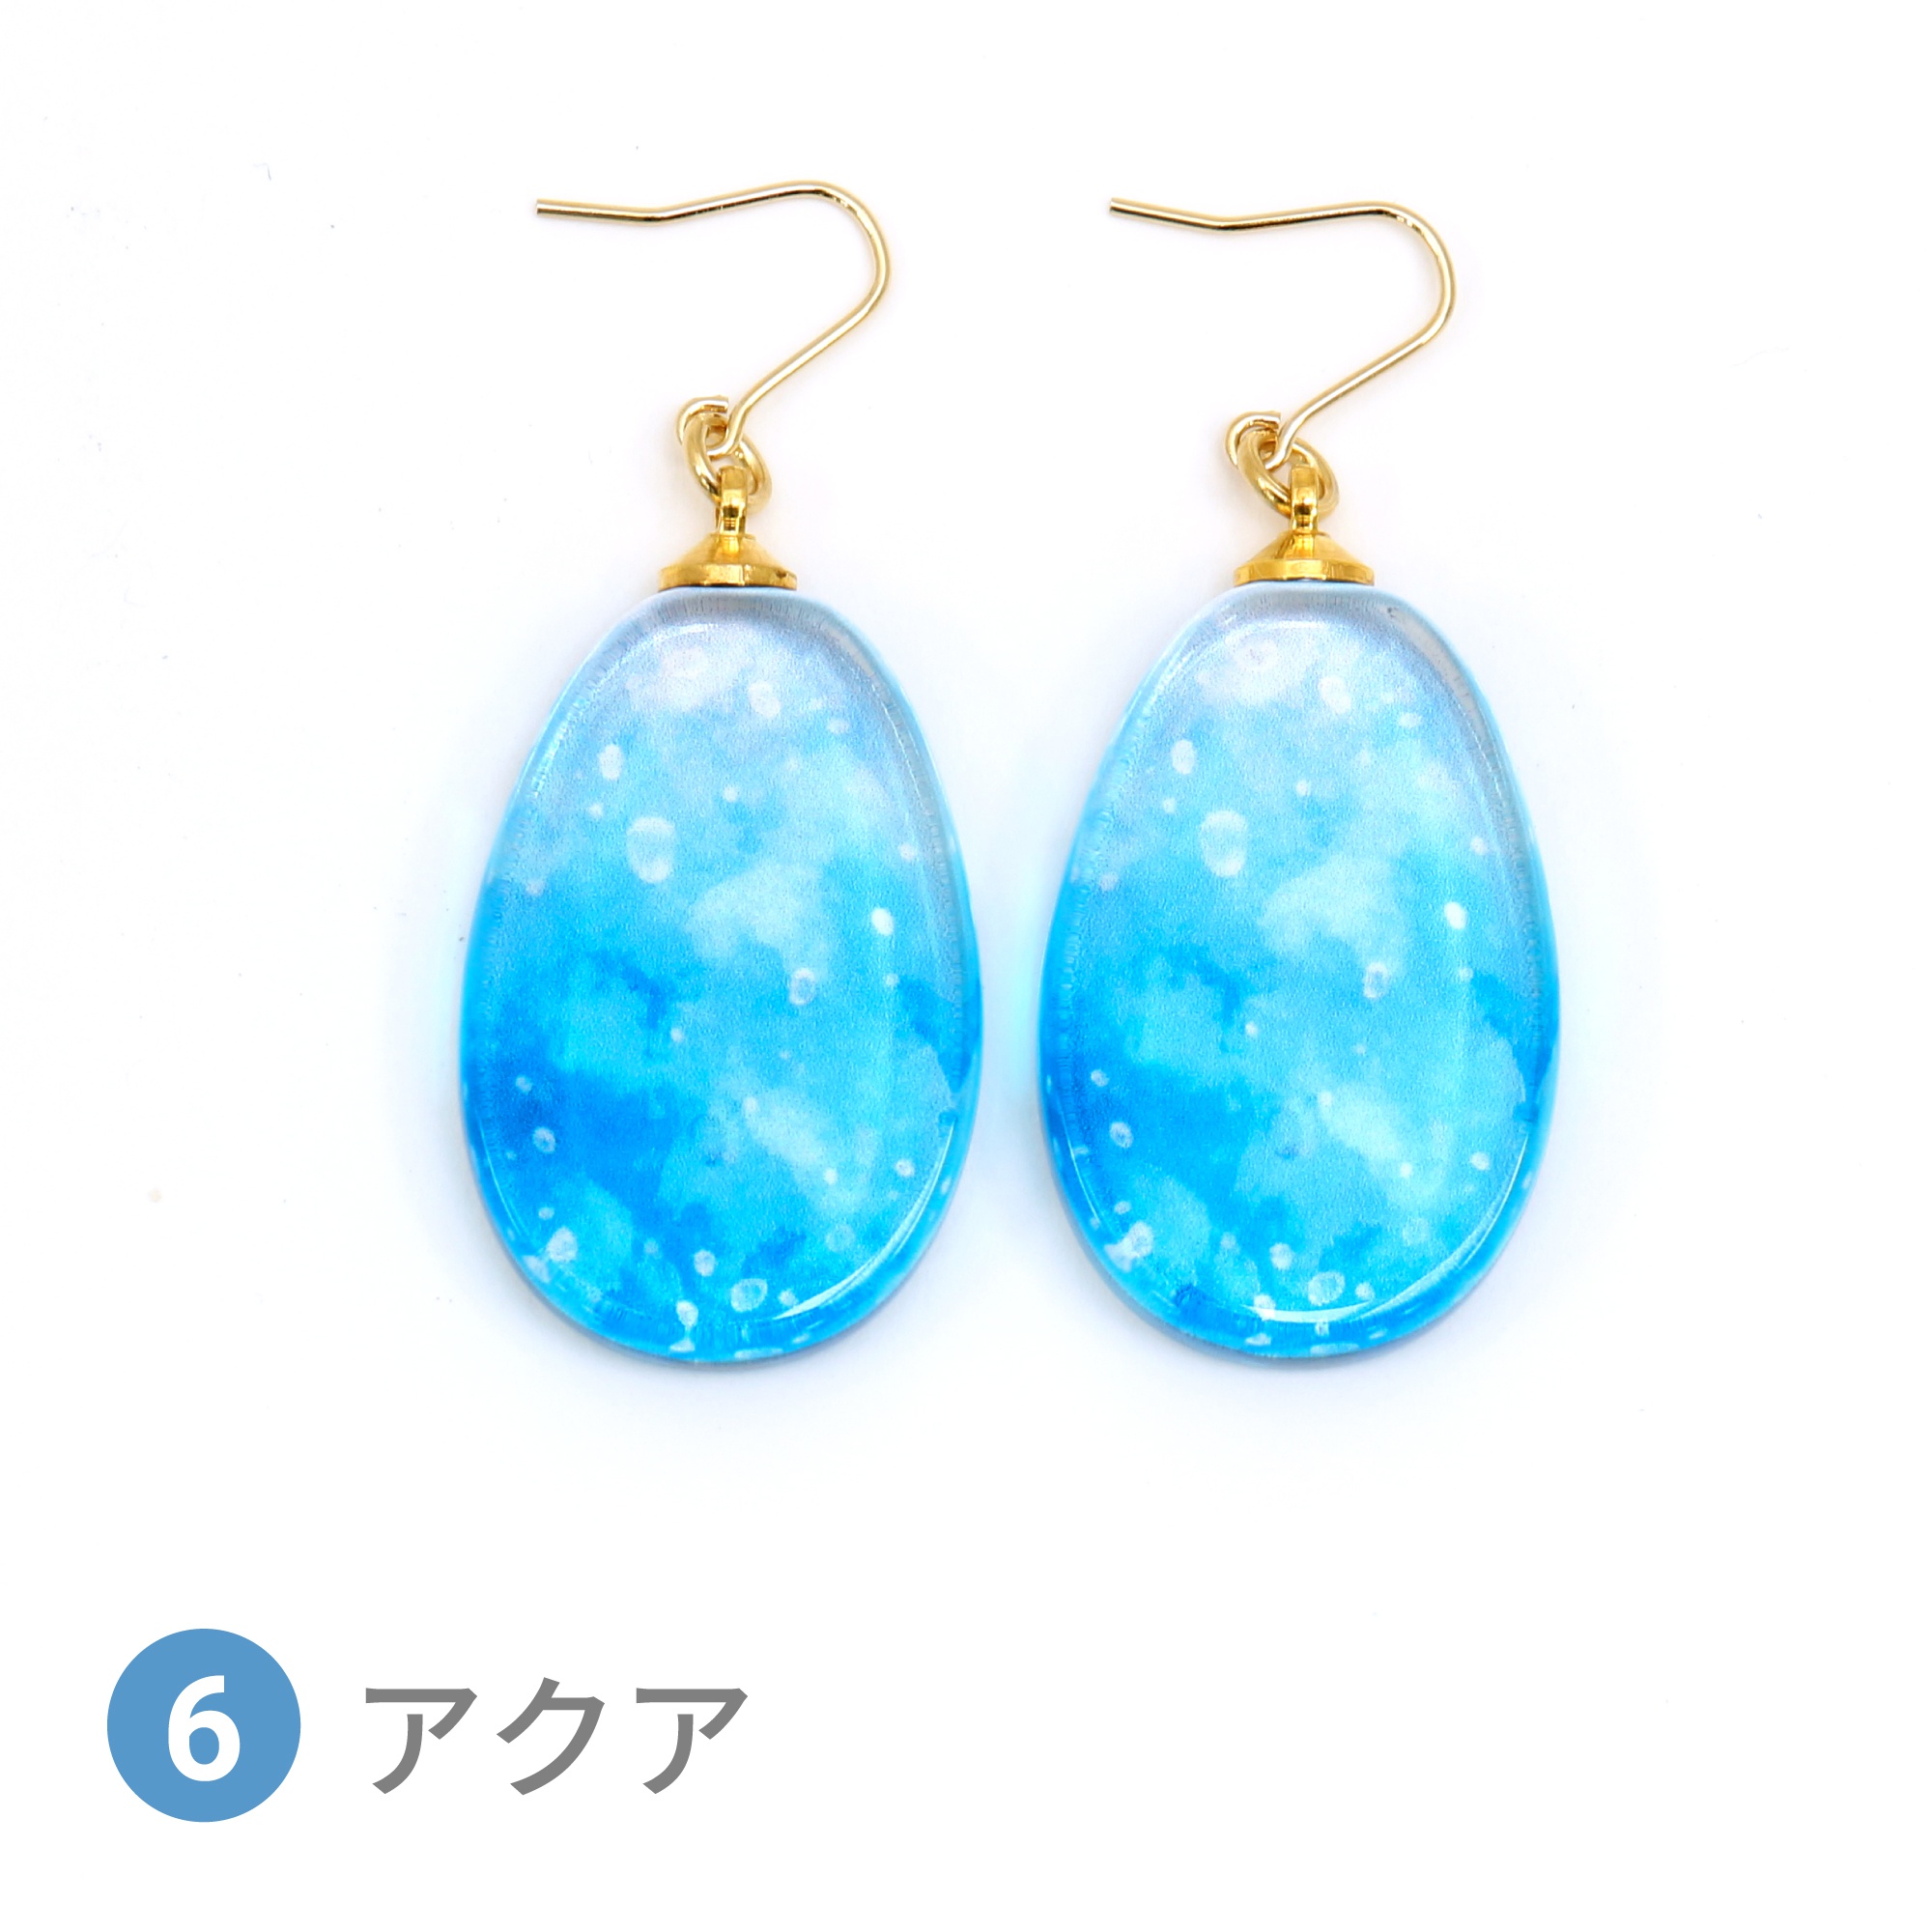 Glass accessories Pierced Earring SODA aqua drop shape